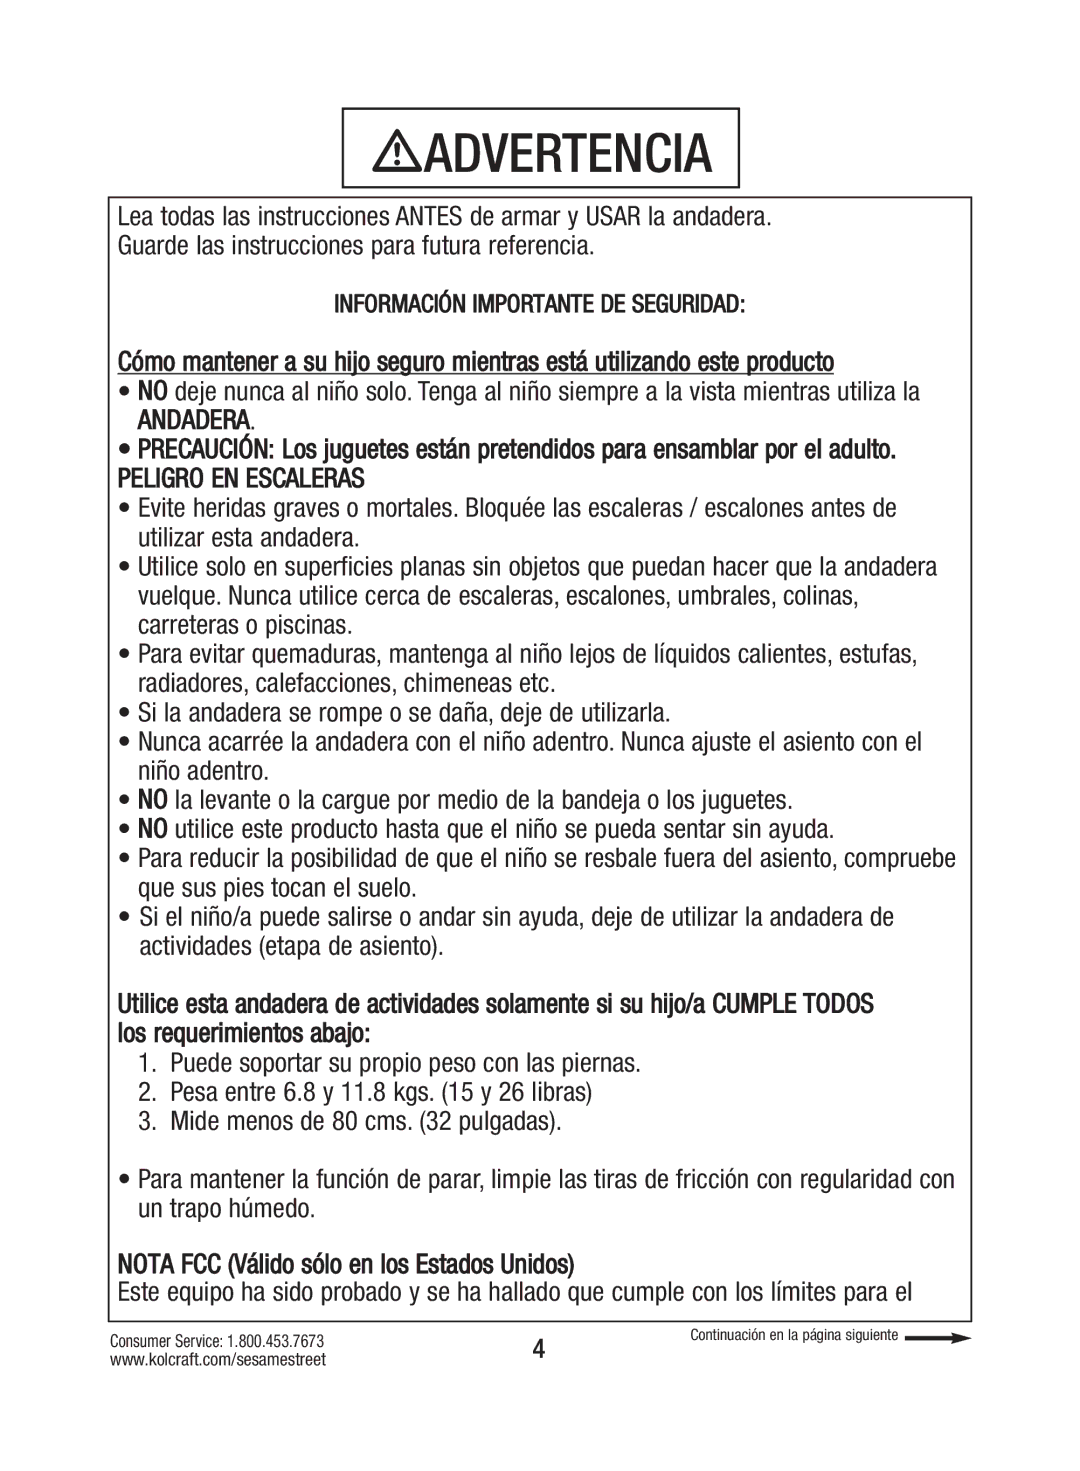 Kolcraft W025-R2 instruction sheet Advertencia 